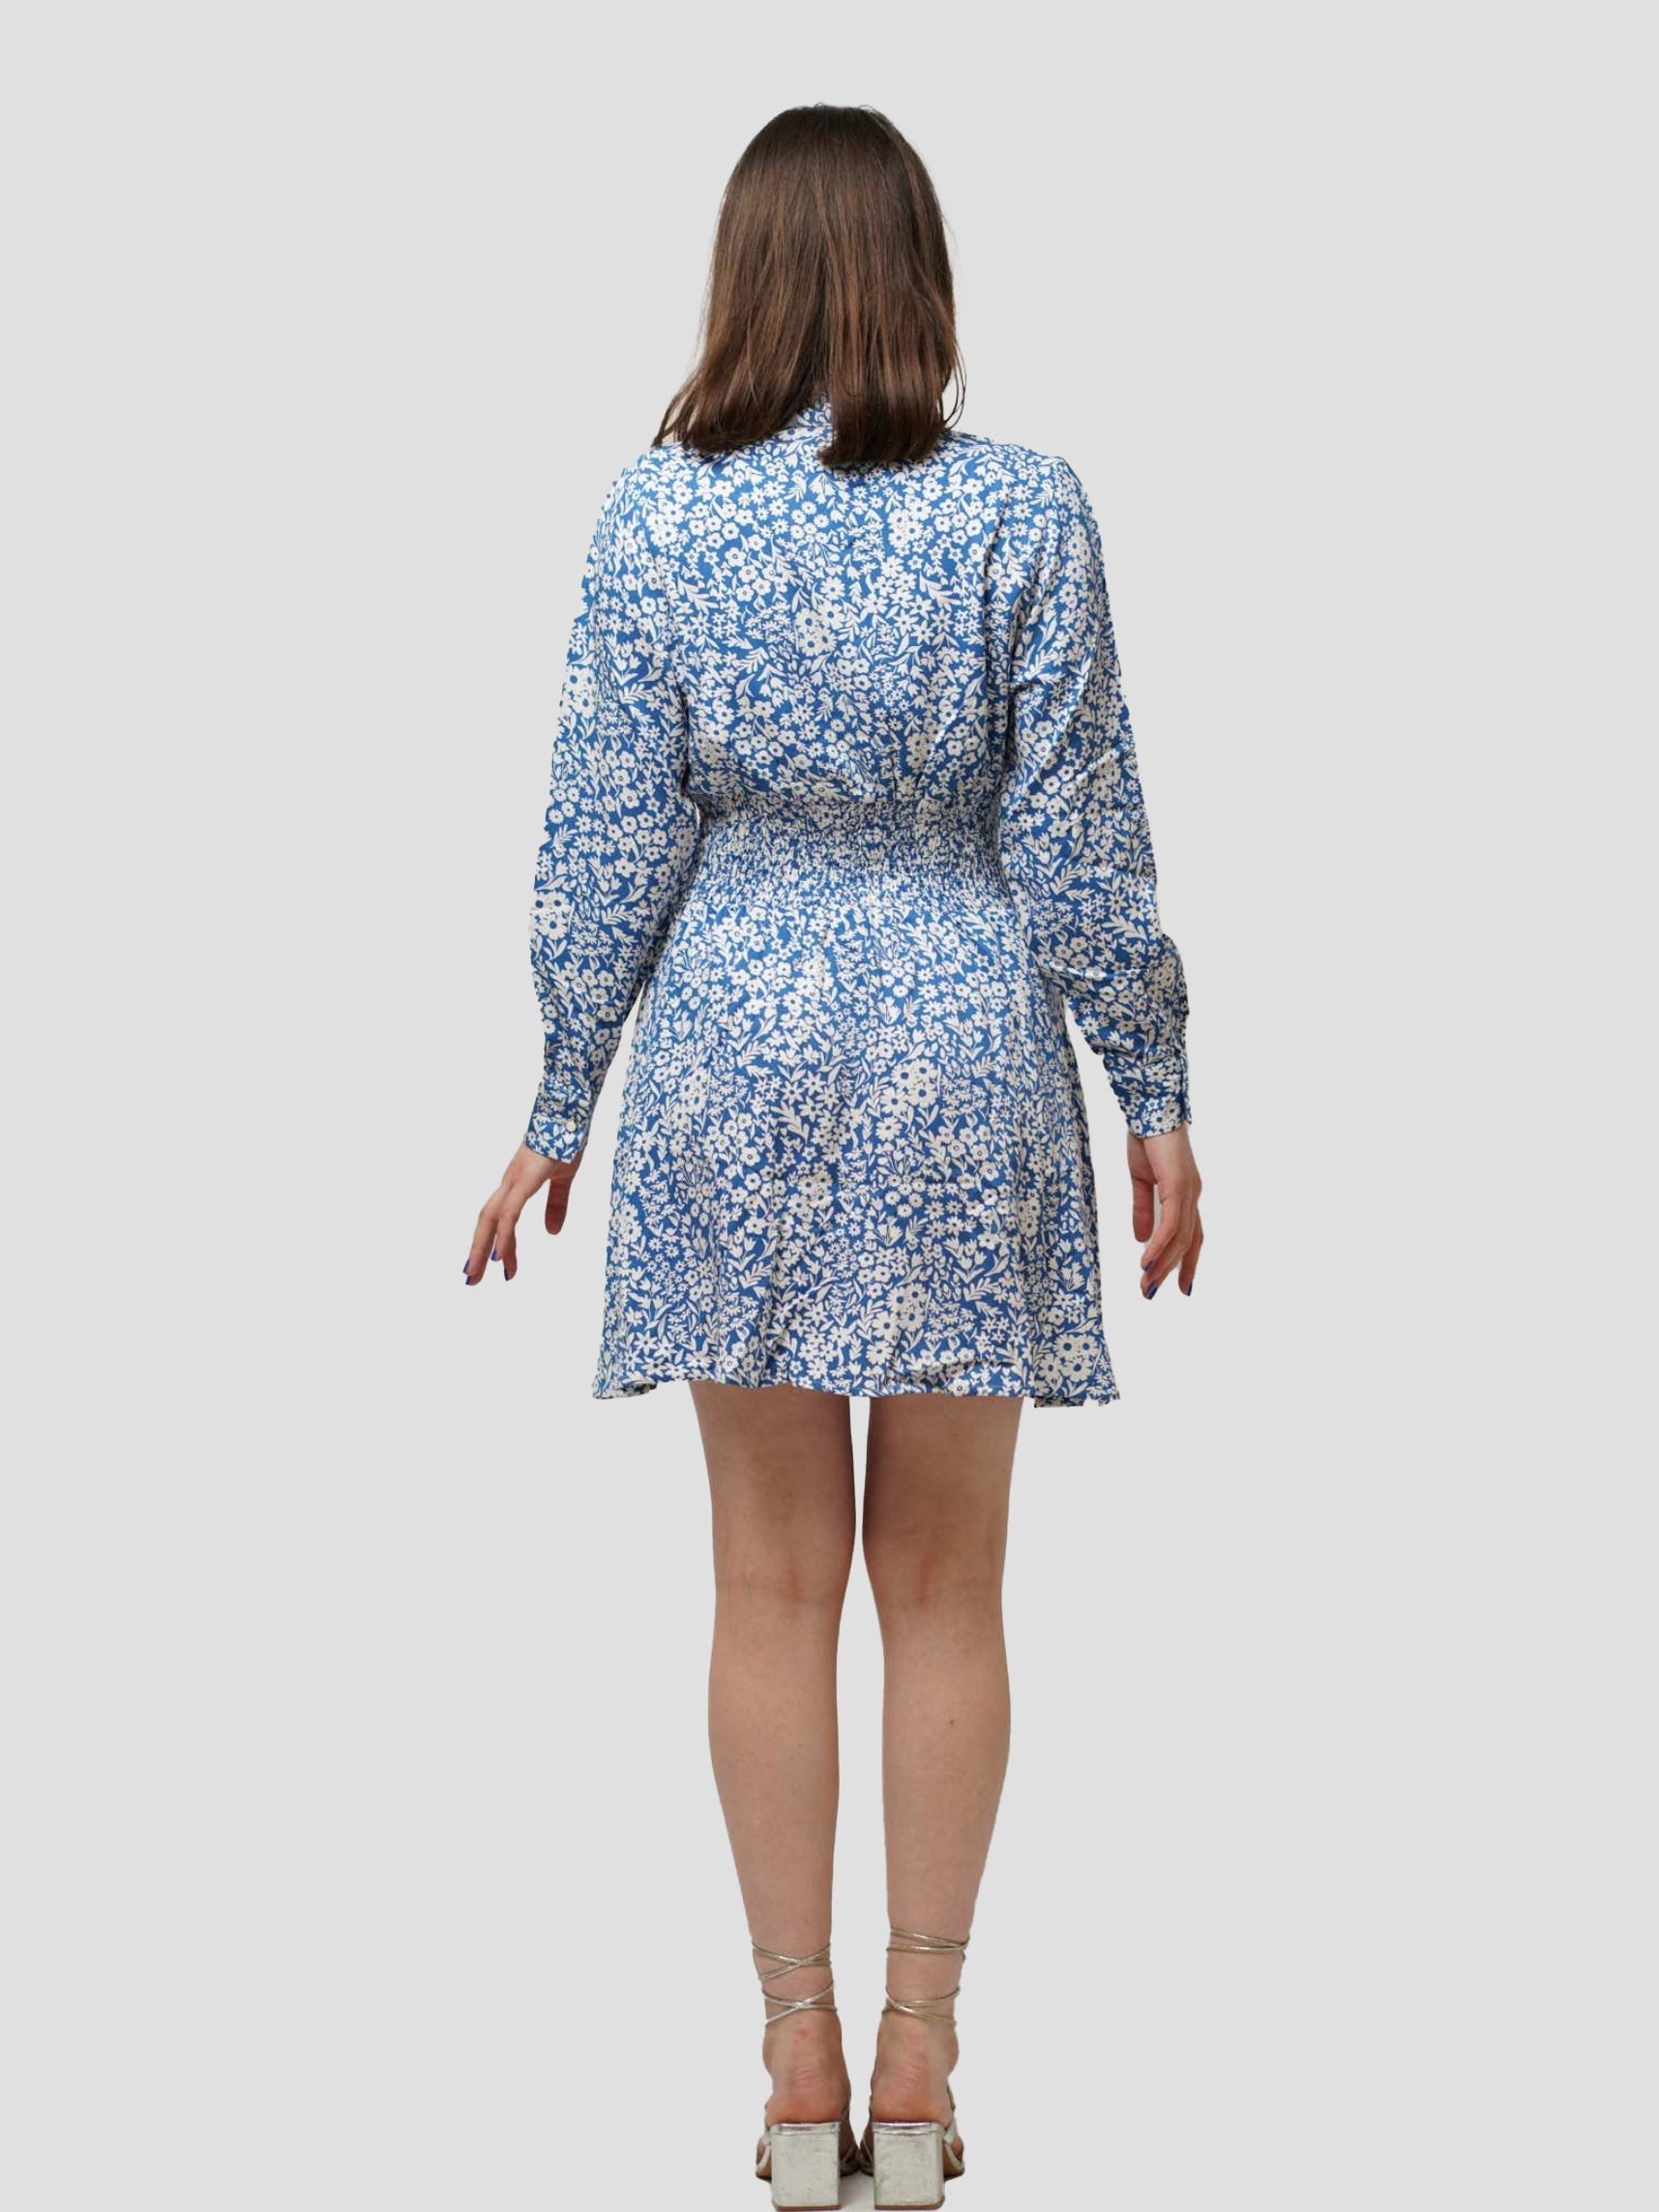 Women's Casual Long-Sleeved Floral Print Dress in Blue, White Print (Minimal floral print) - inteblu